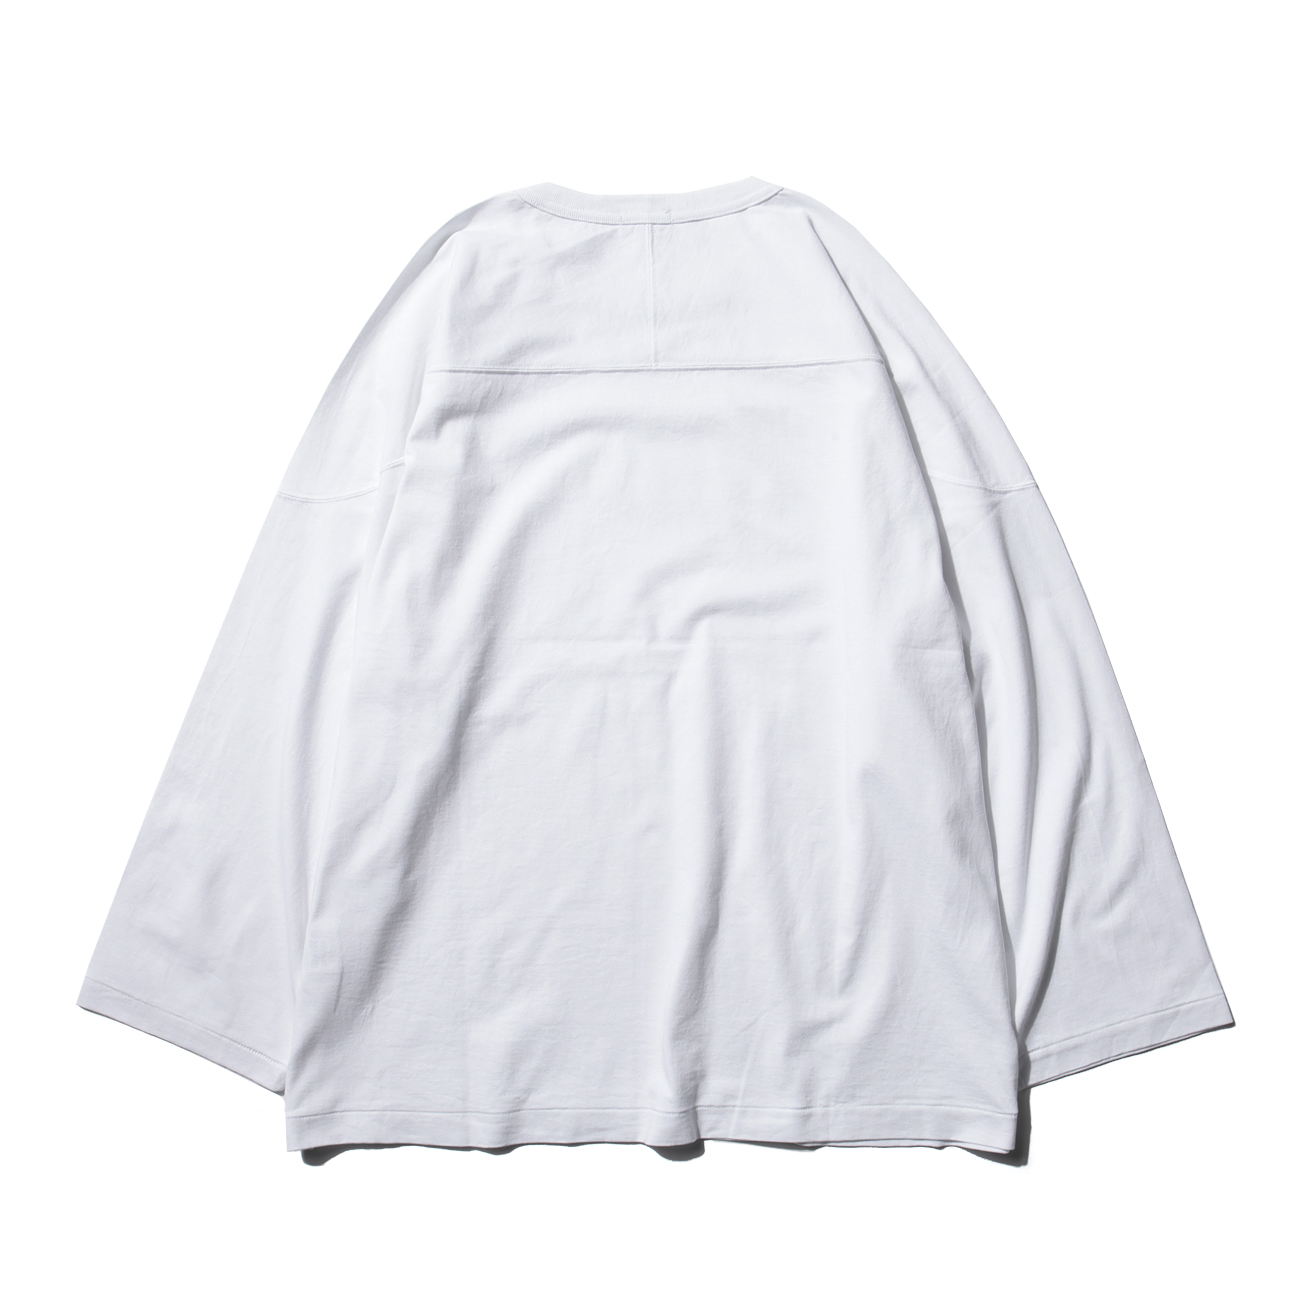 COMOLI / コモリ   フットボール Tシャツ   White   通販   正規取扱店